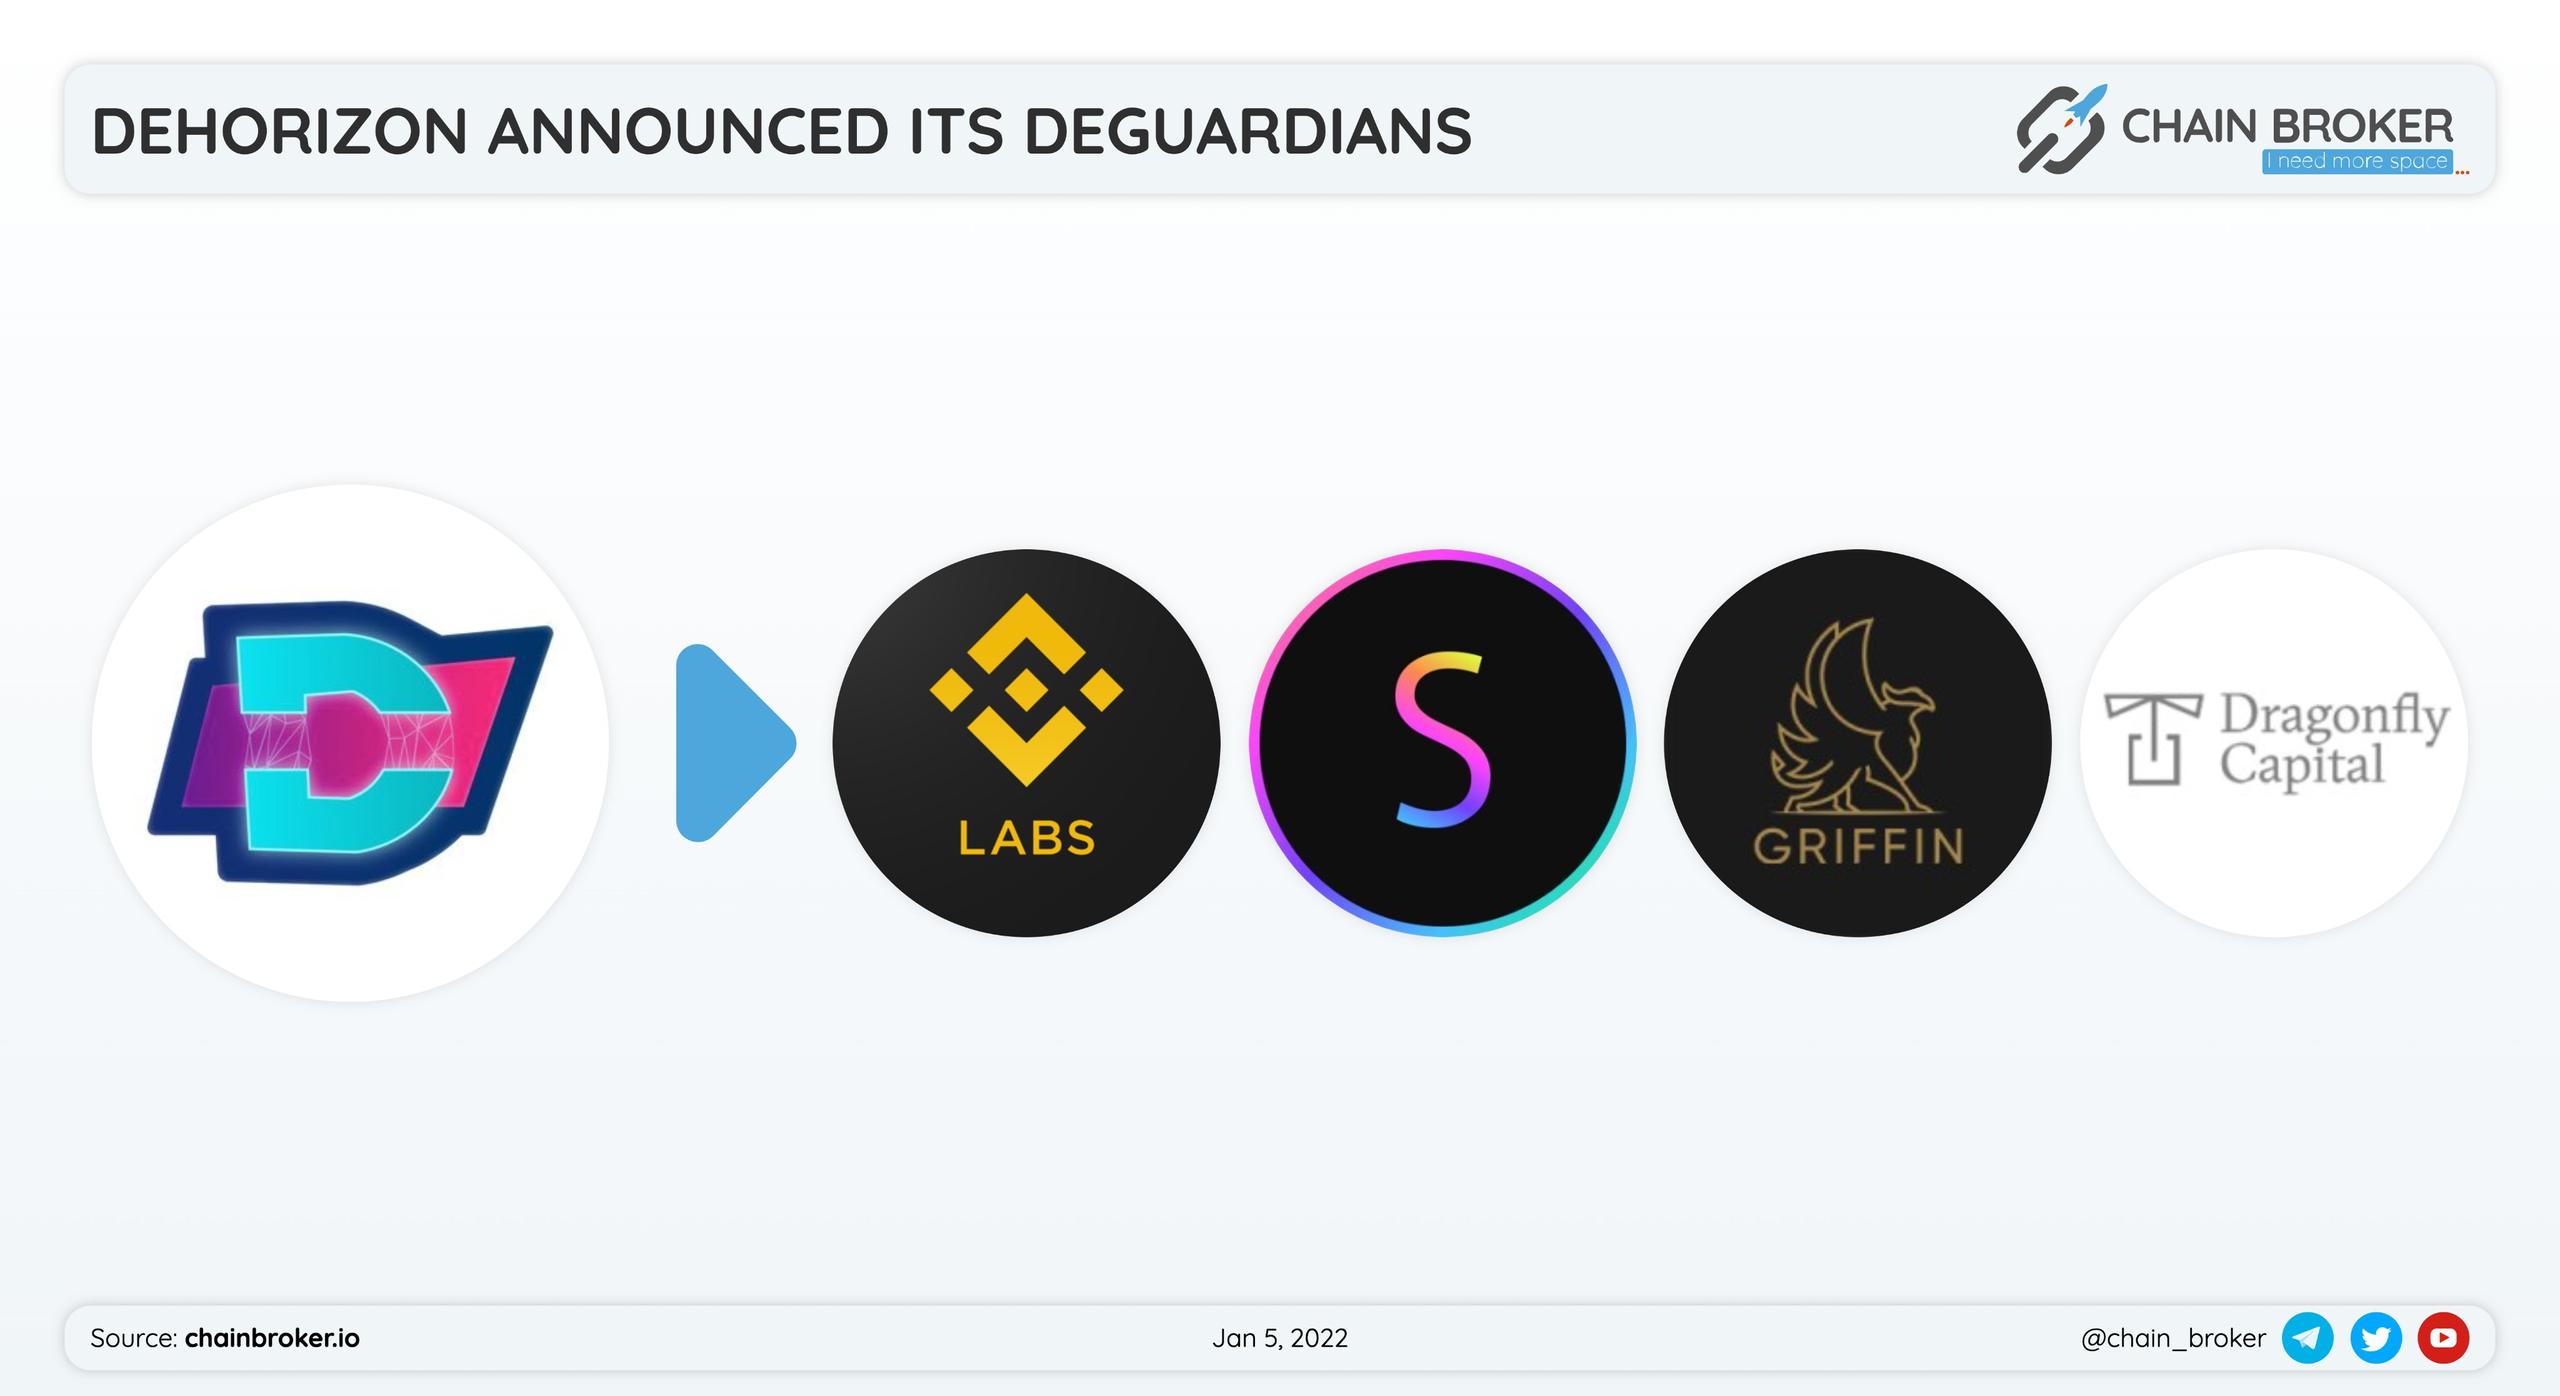 Dehorizon has announced its DeGuardians